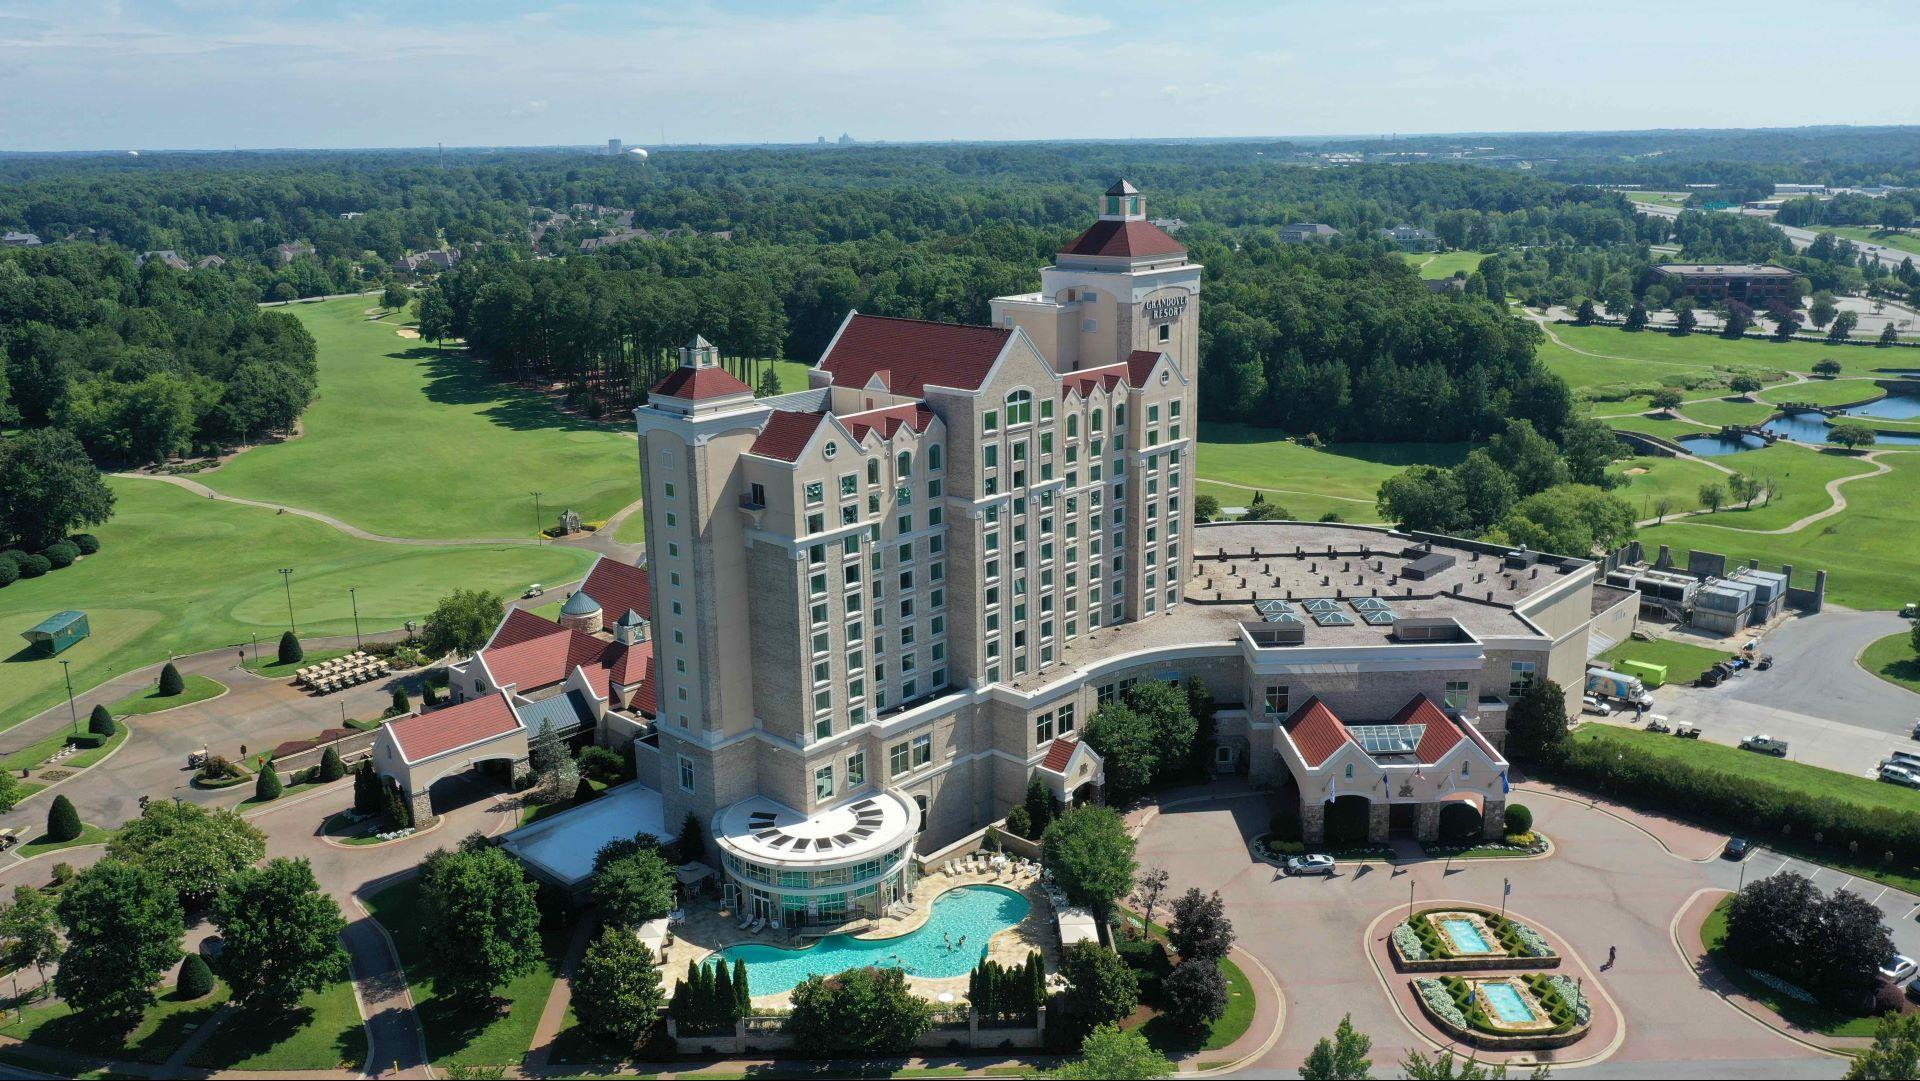 Grandover Resort & Spa, a Wyndham Grand Hotel, a Wyndham Meetings Collection Hotel in Greensboro, NC